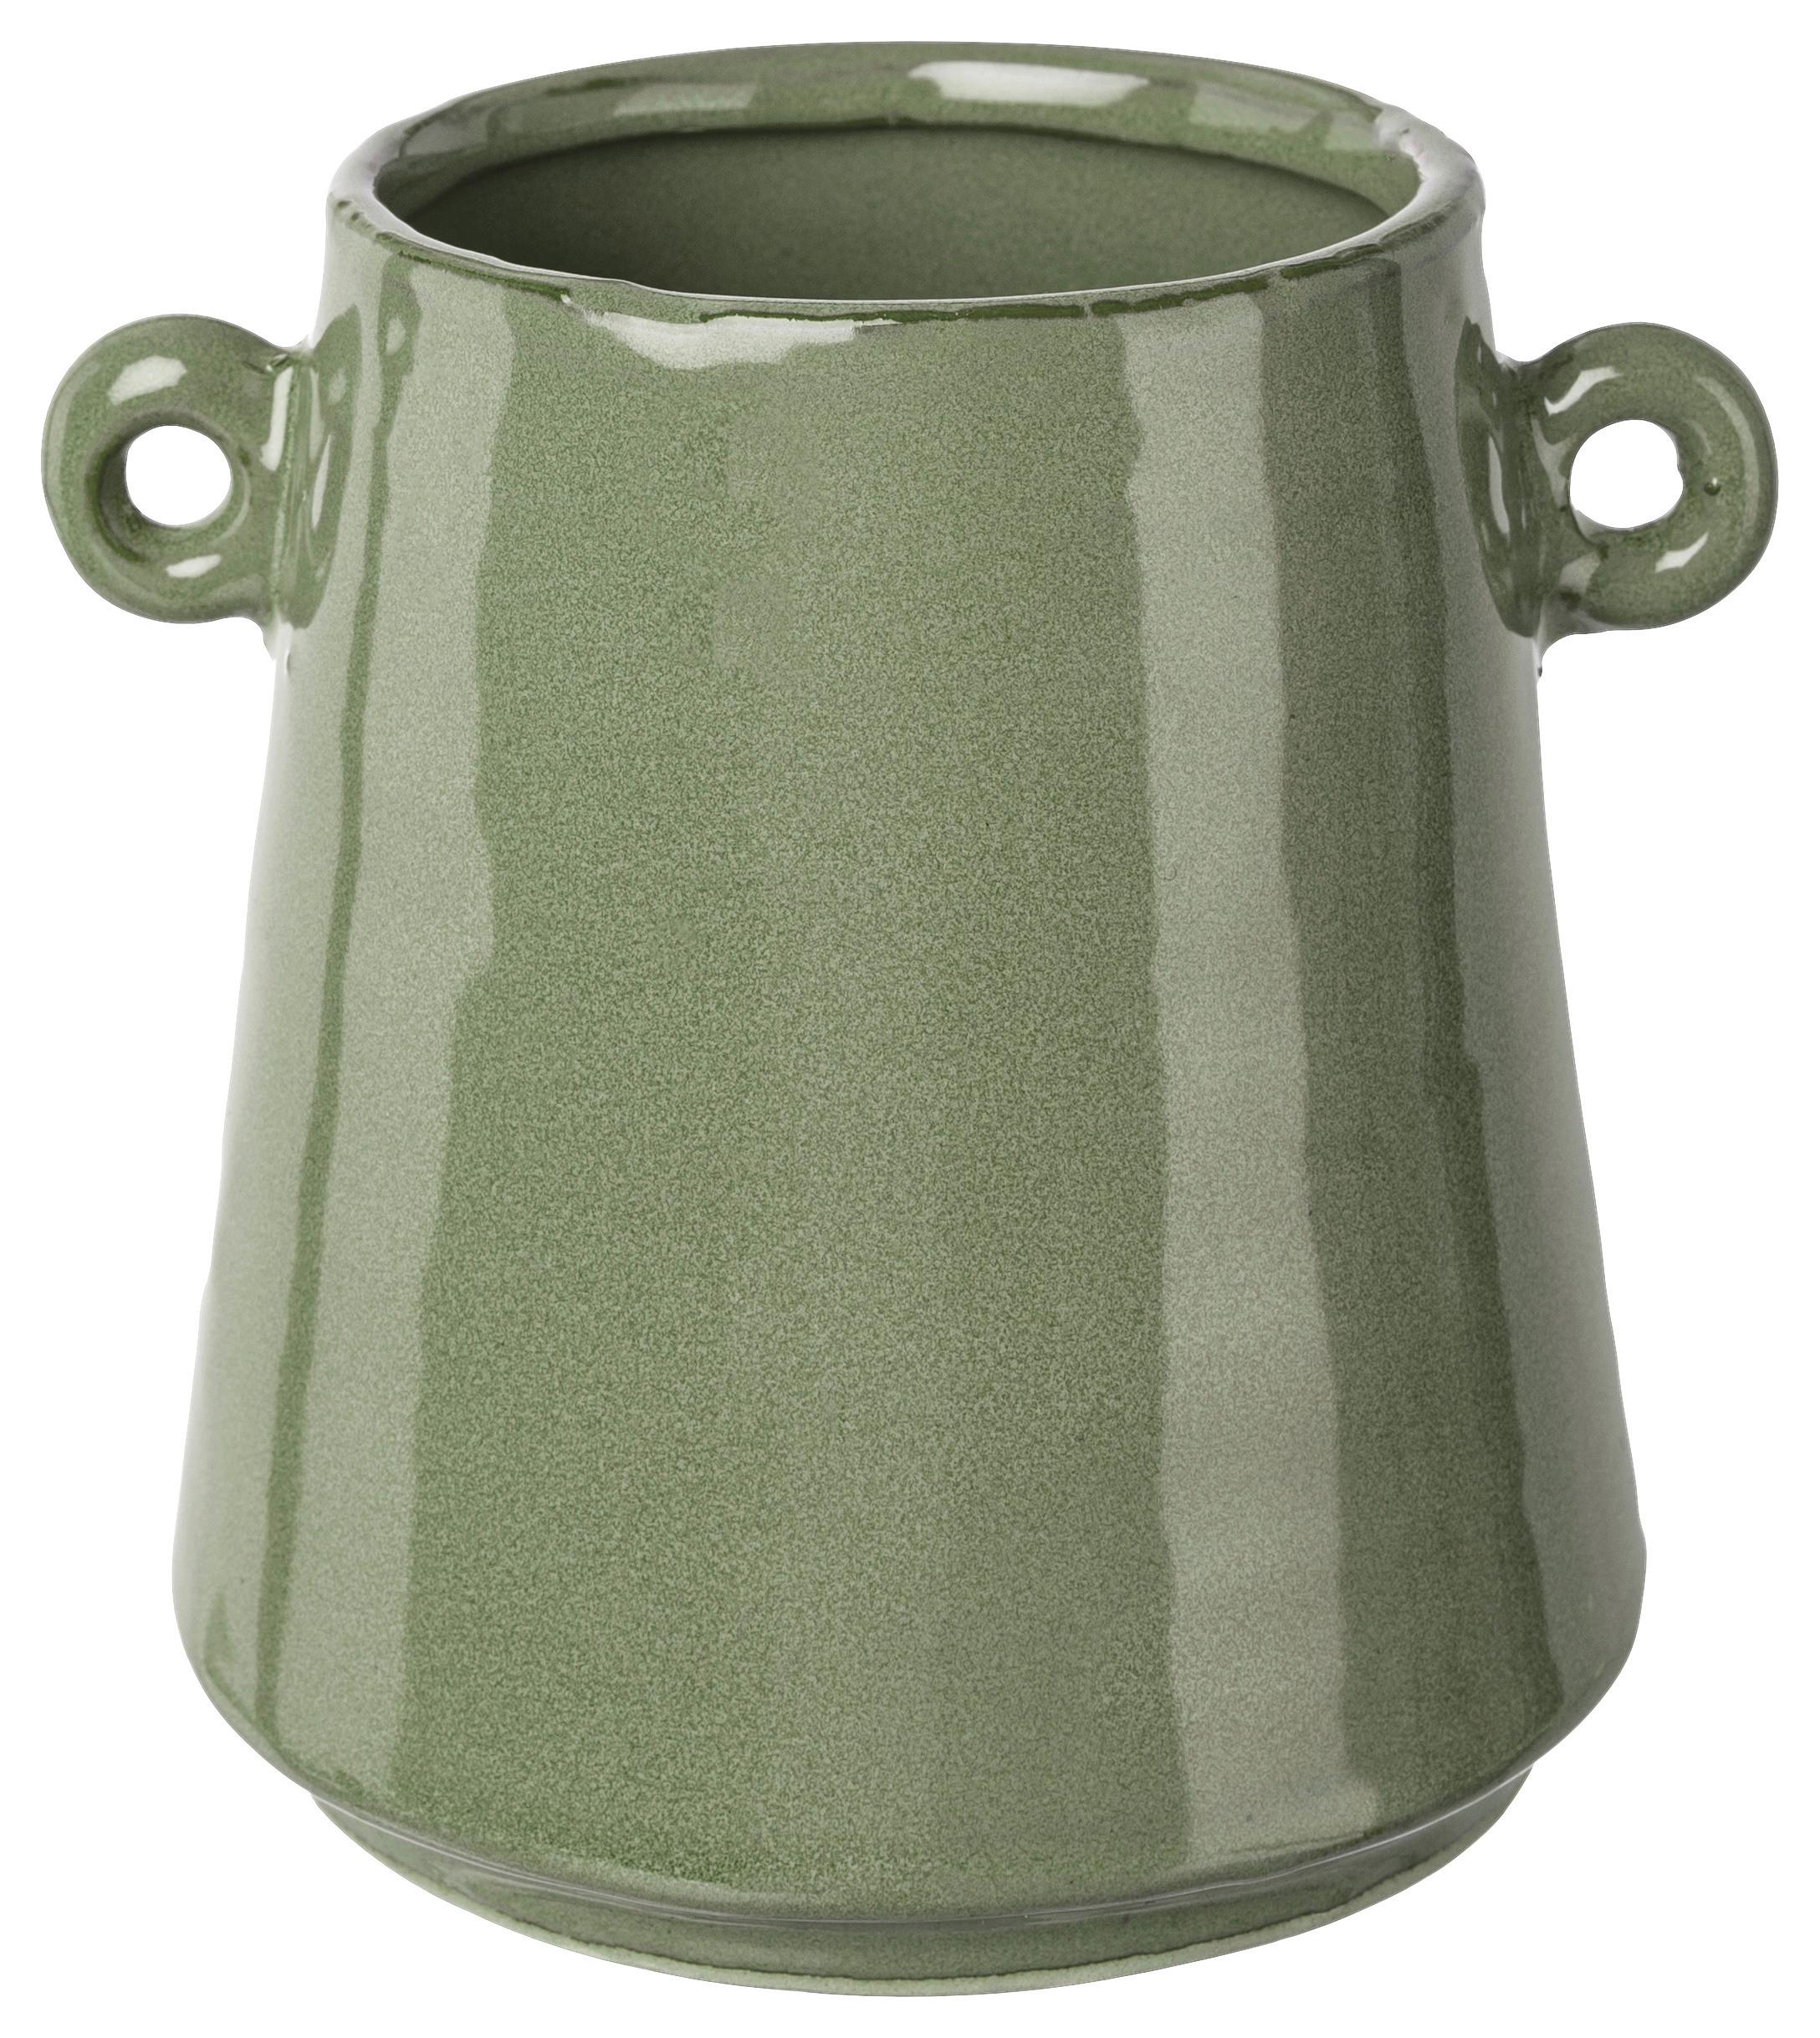 Vaza Emma I -Paz- - žadasto zelena, Moderno, keramika (12,5/11,5cm)